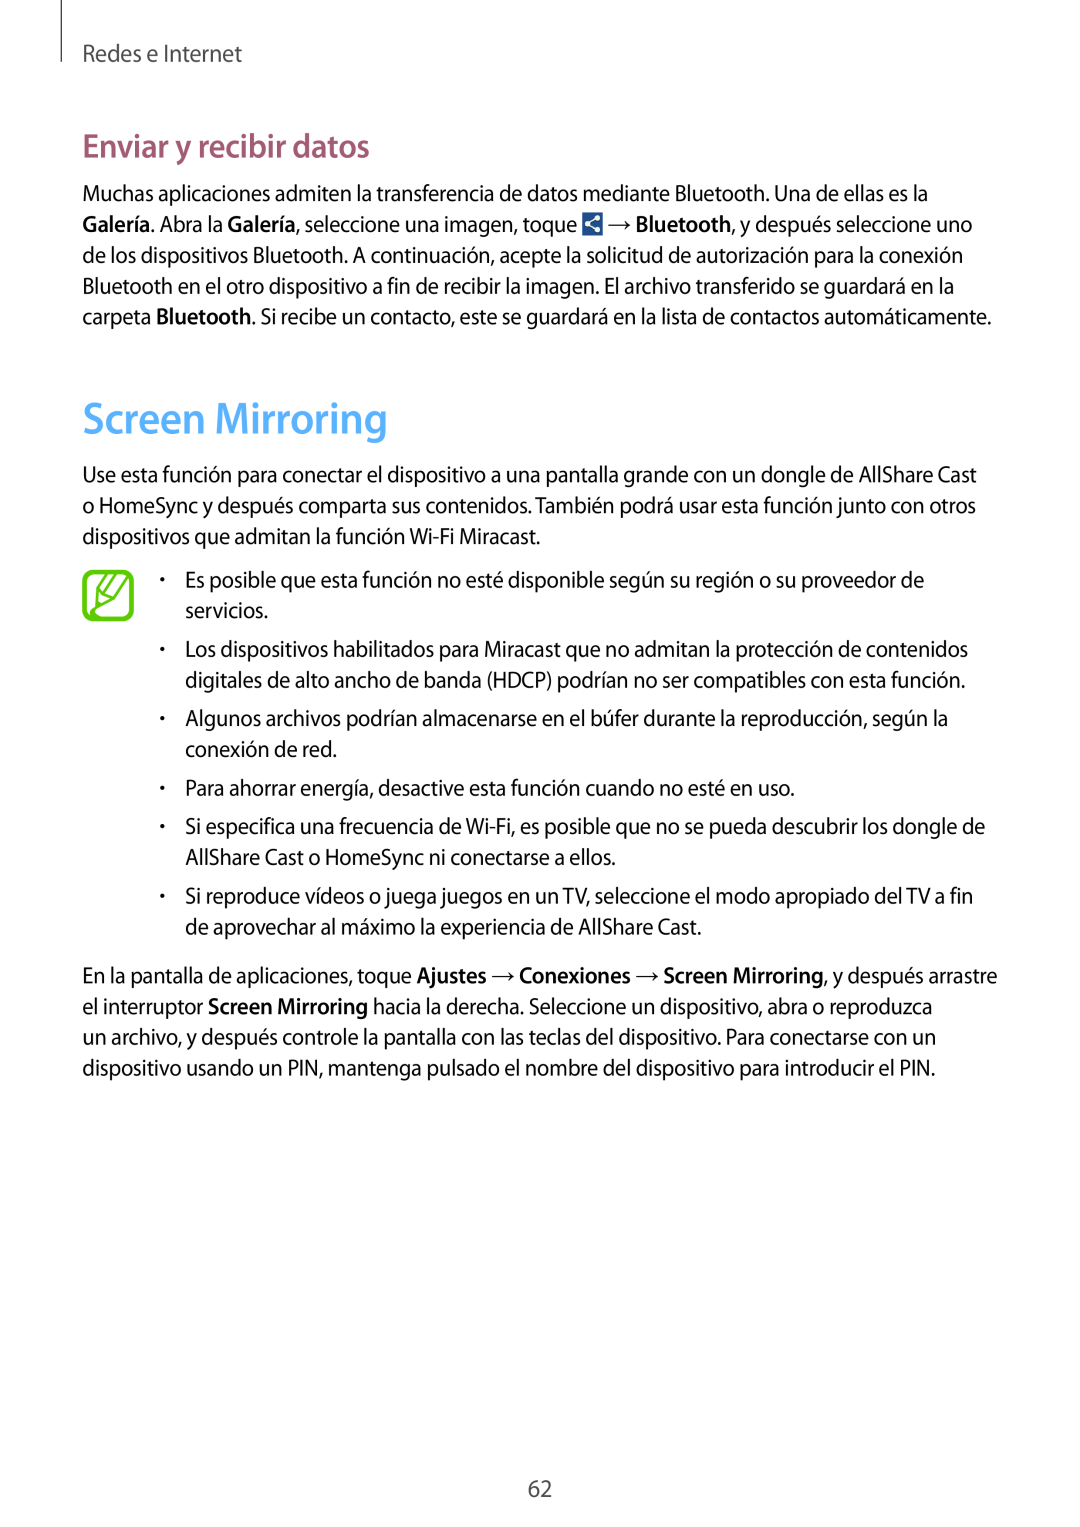 Samsung GT-I9195ZWAPHN, GT-I9195ZKADBT, GT-I9195ZKAMEO manual Screen Mirroring, Enviar y recibir datos, Redes e Internet 